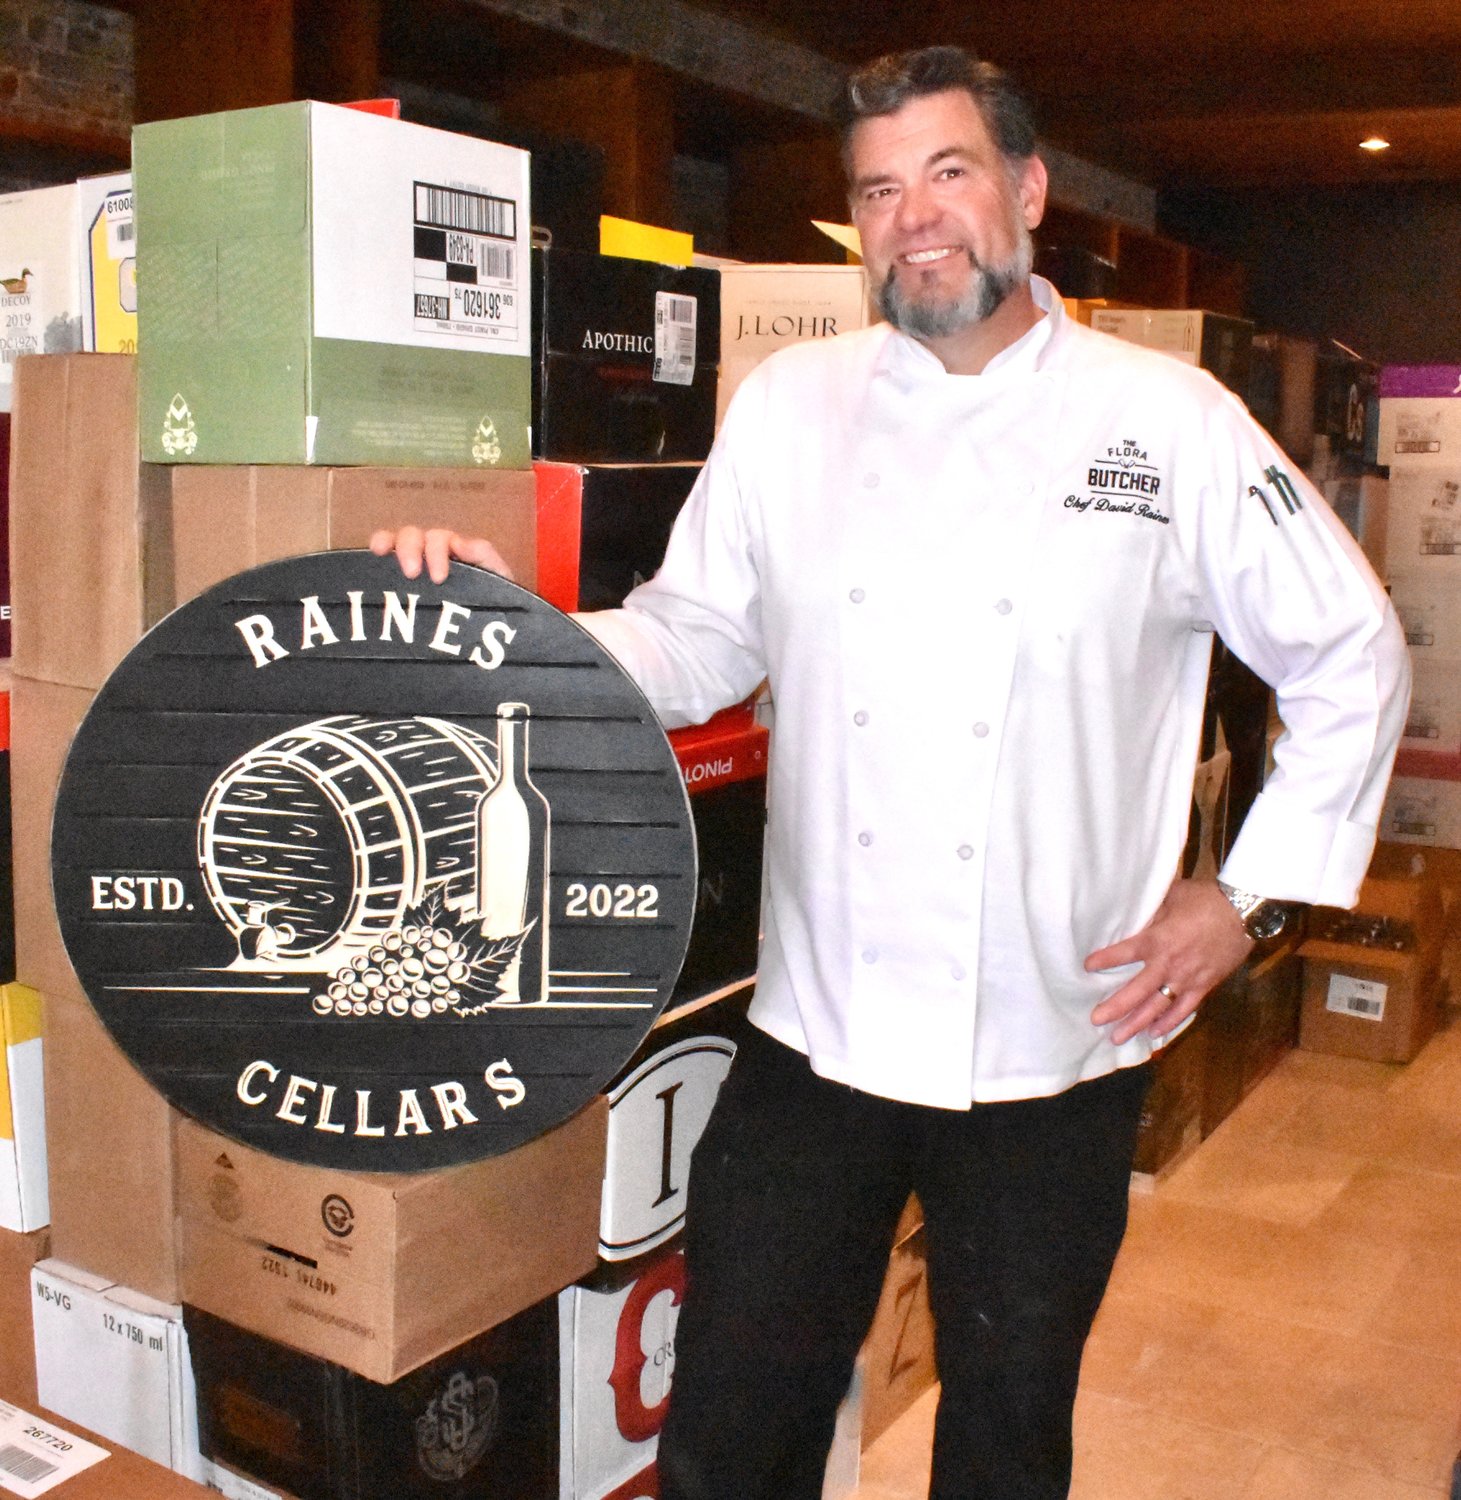 Chef David Raines is excited to open Raines Cellars next door to The Flora Butcher in Flora.